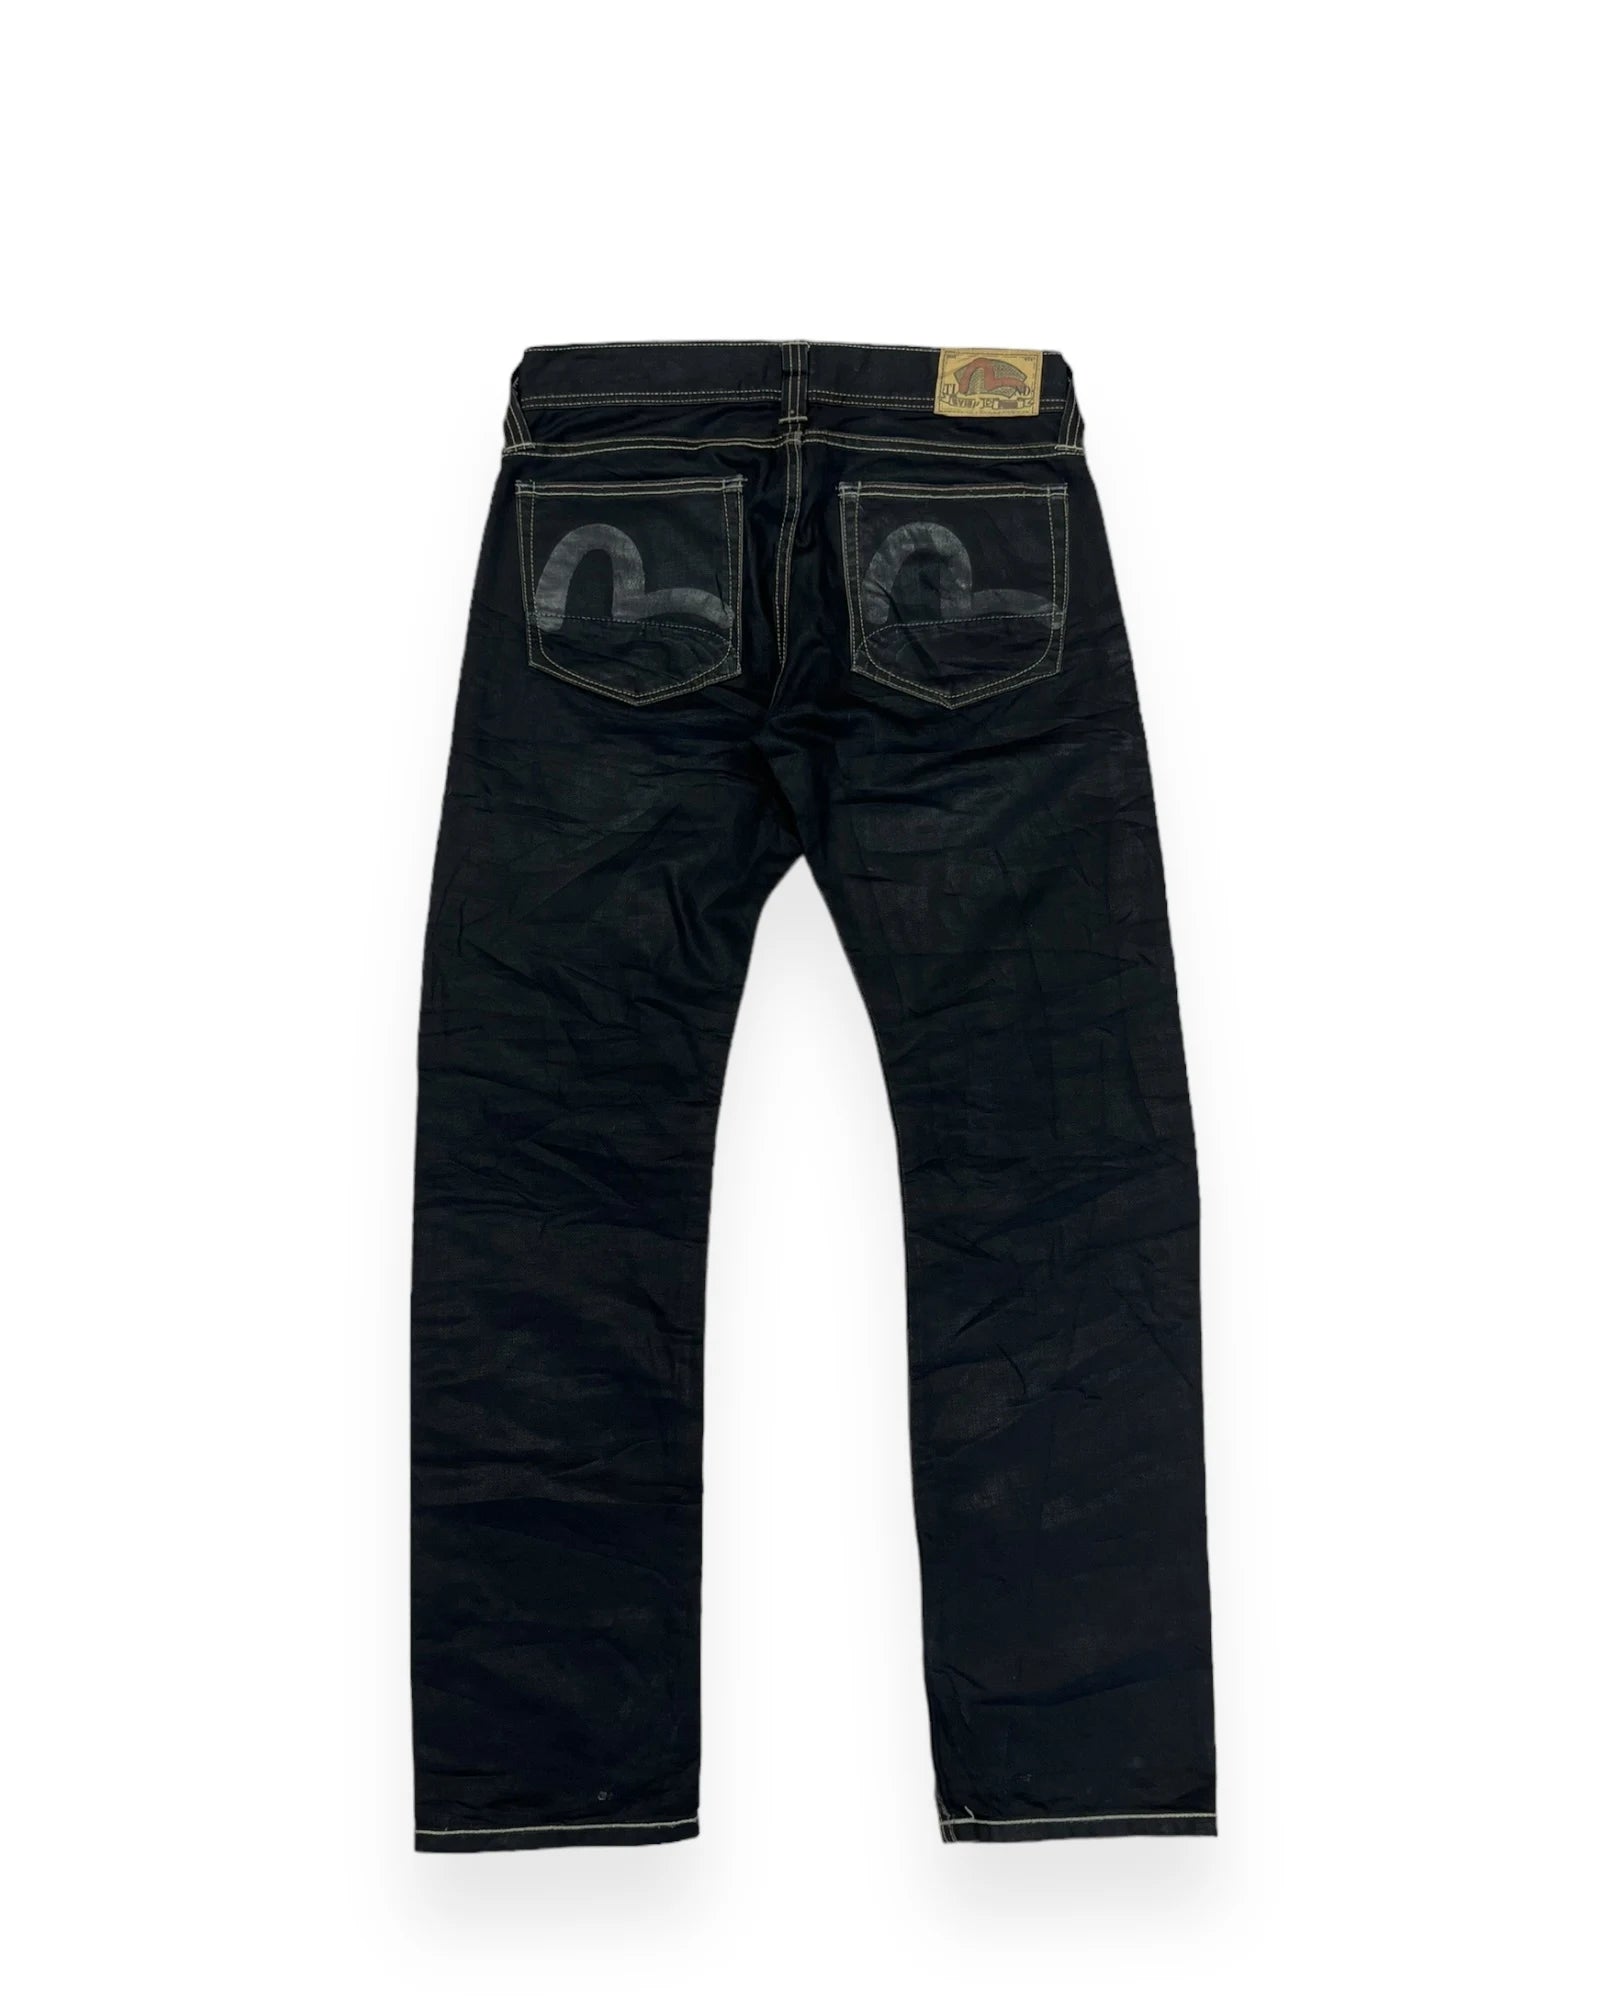 Evisu Jeans - 32W32L 